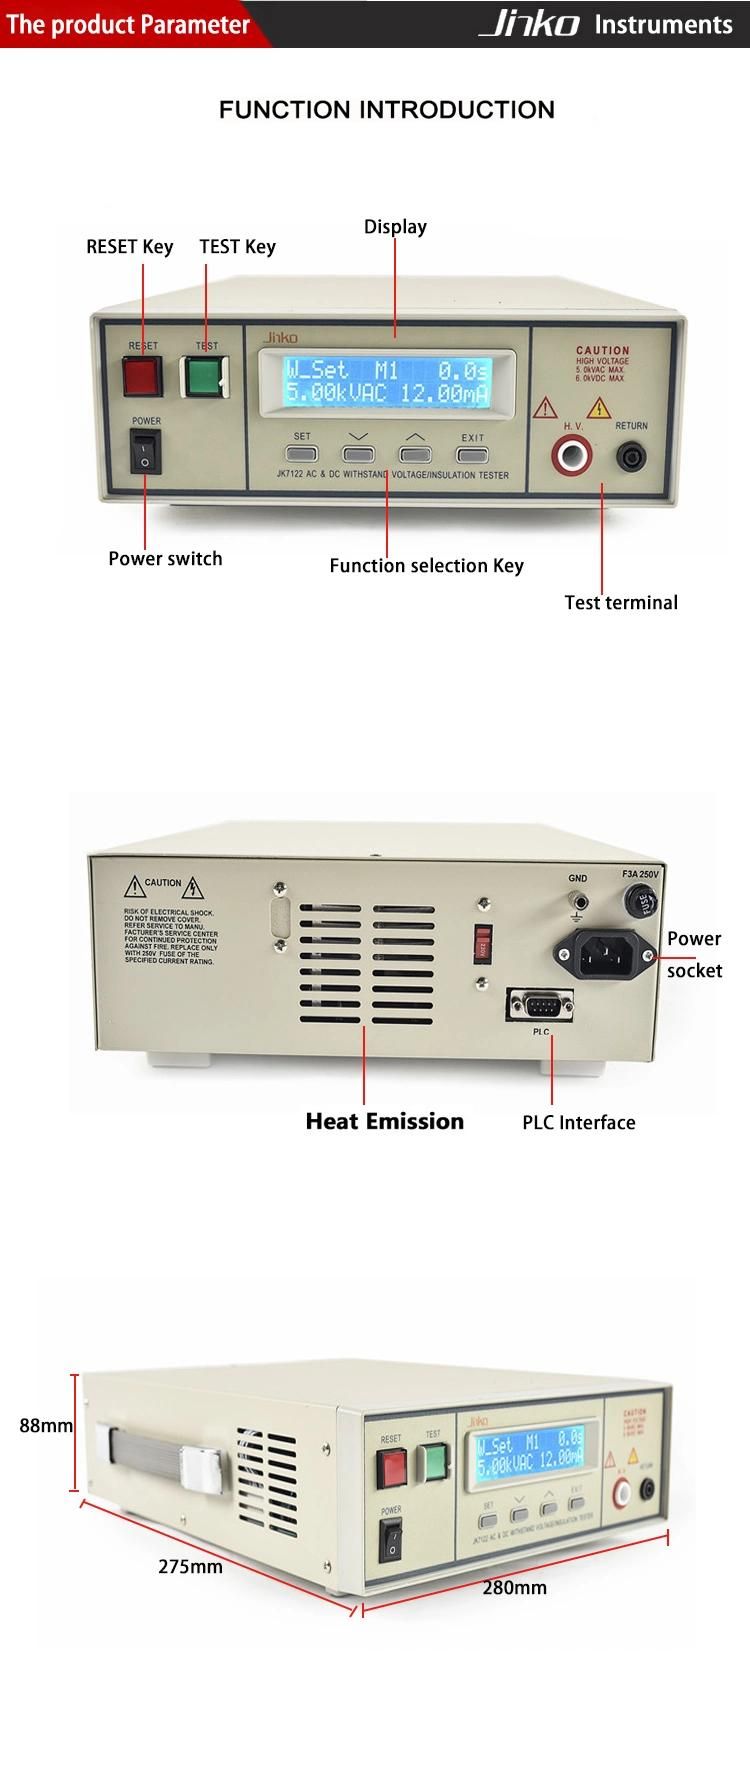 Jk7122 AC DC Withstand Voltage/Programmable Voltage Insulation Resistance Tester